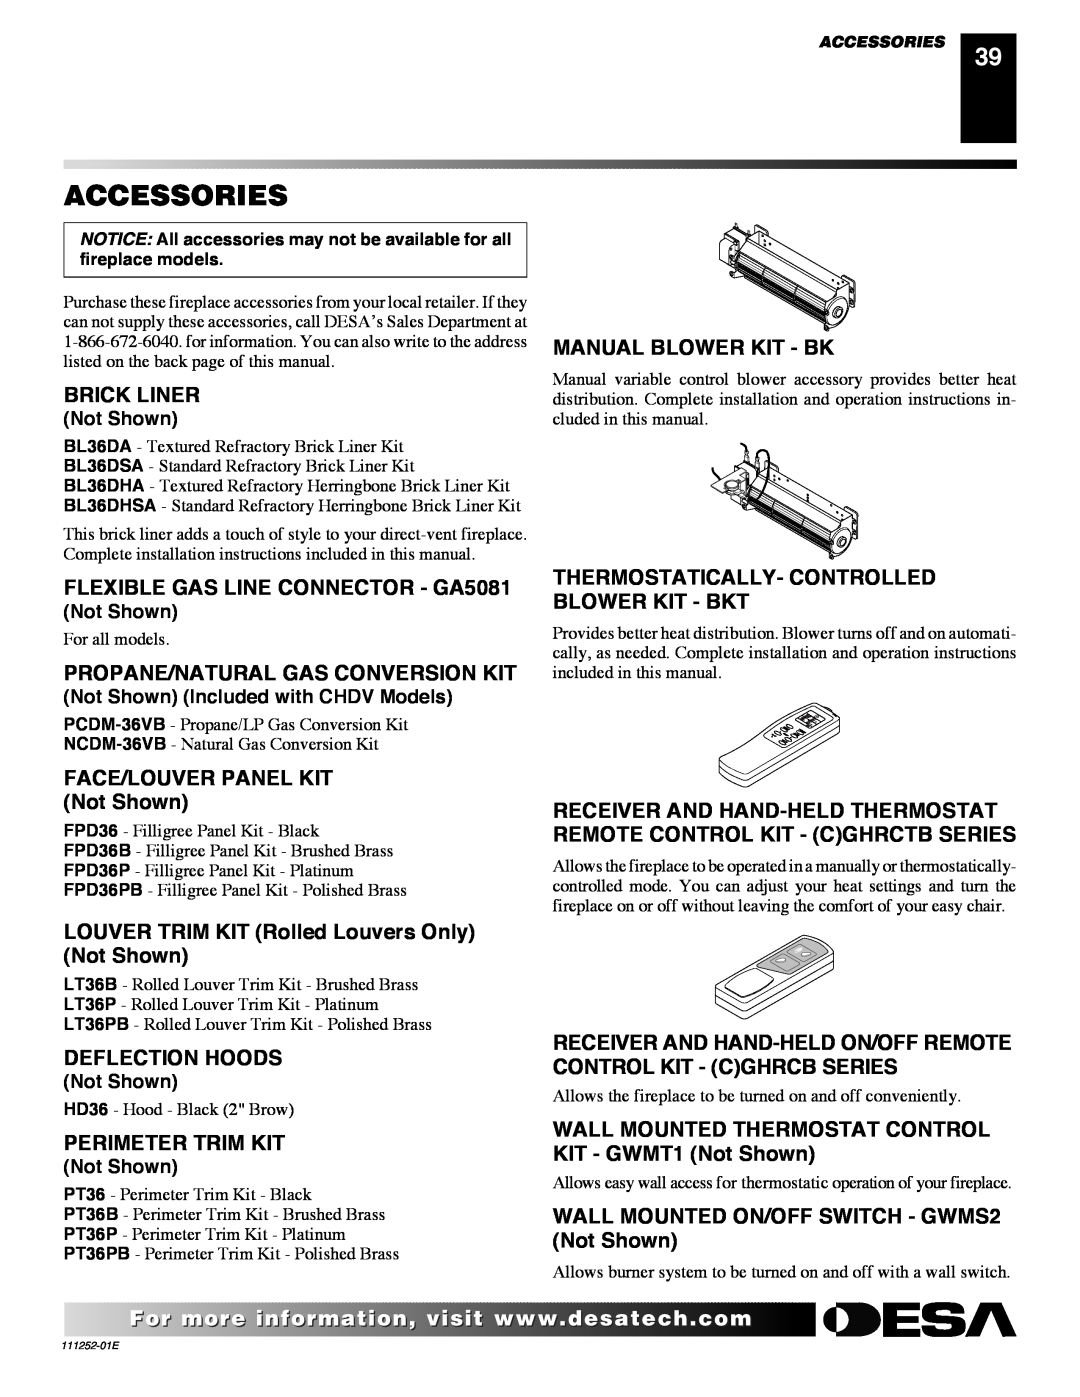 Desa CHDV36NR-C Accessories, Manual Blower Kit - Bk, Brick Liner, FLEXIBLE GAS LINE CONNECTOR - GA5081, Deflection Hoods 